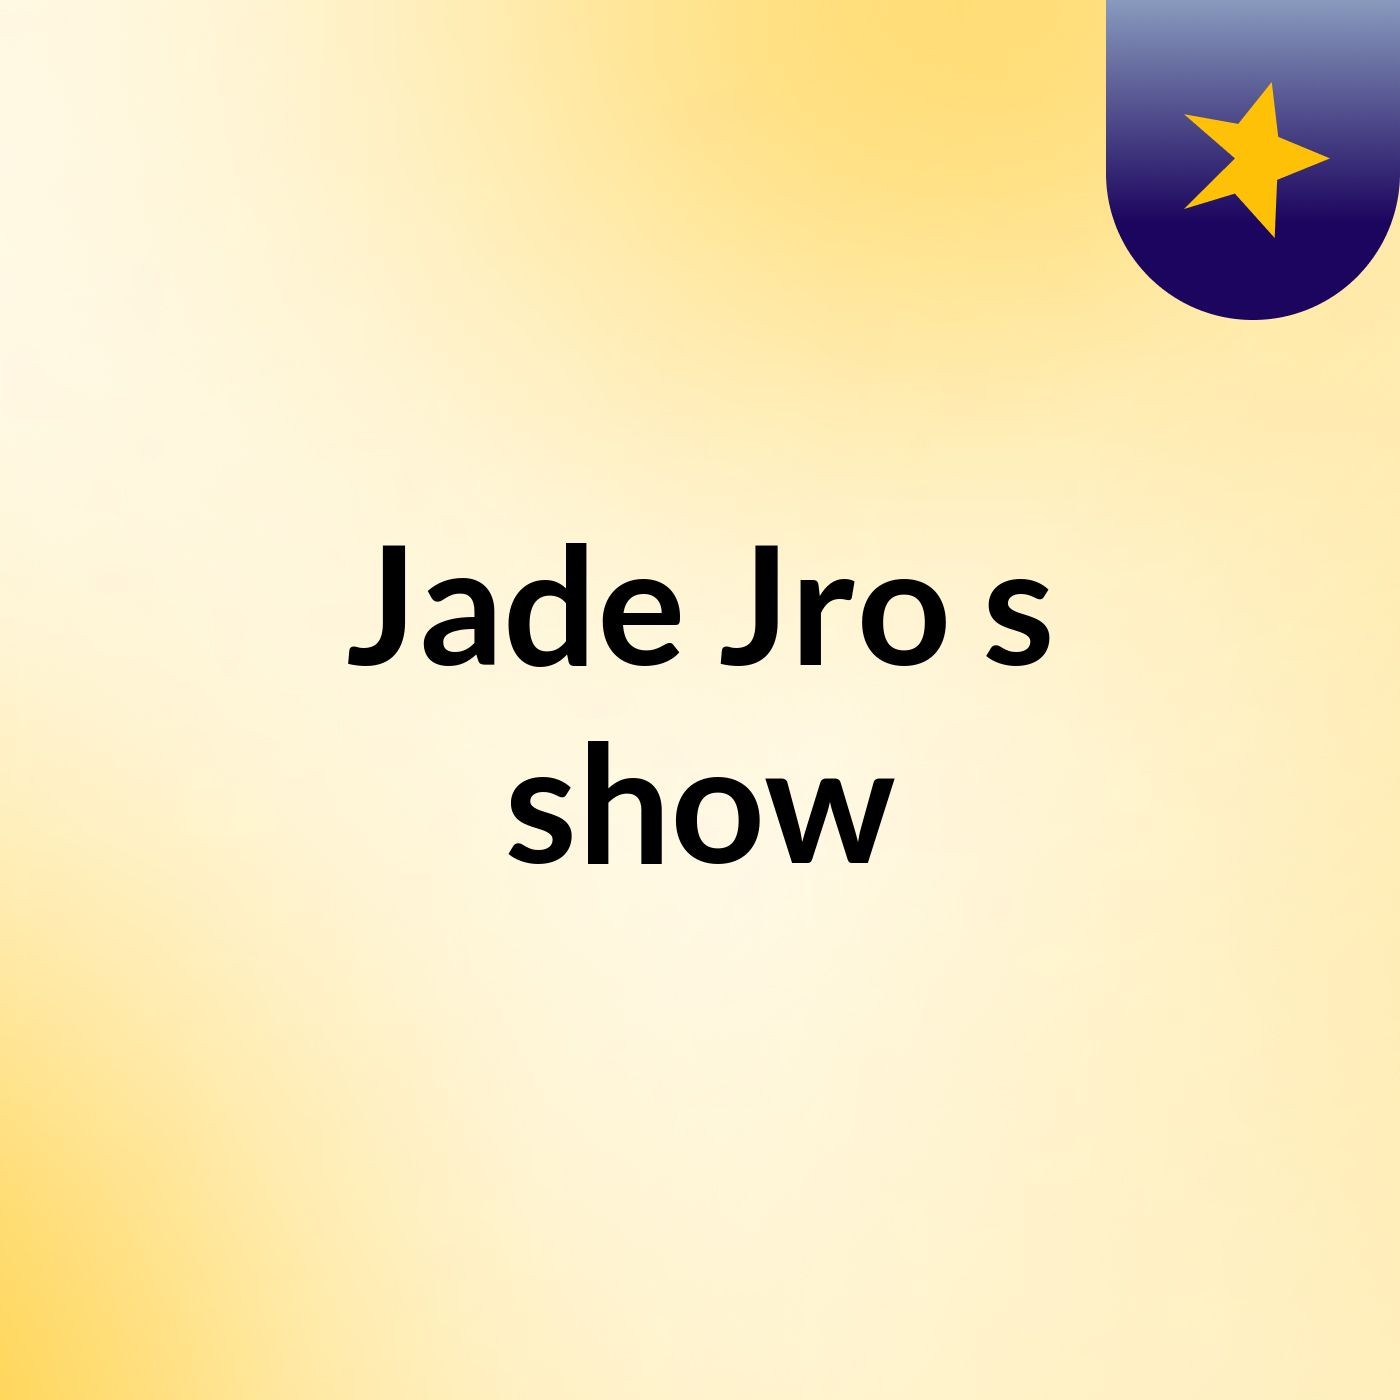 Jade Jro's show